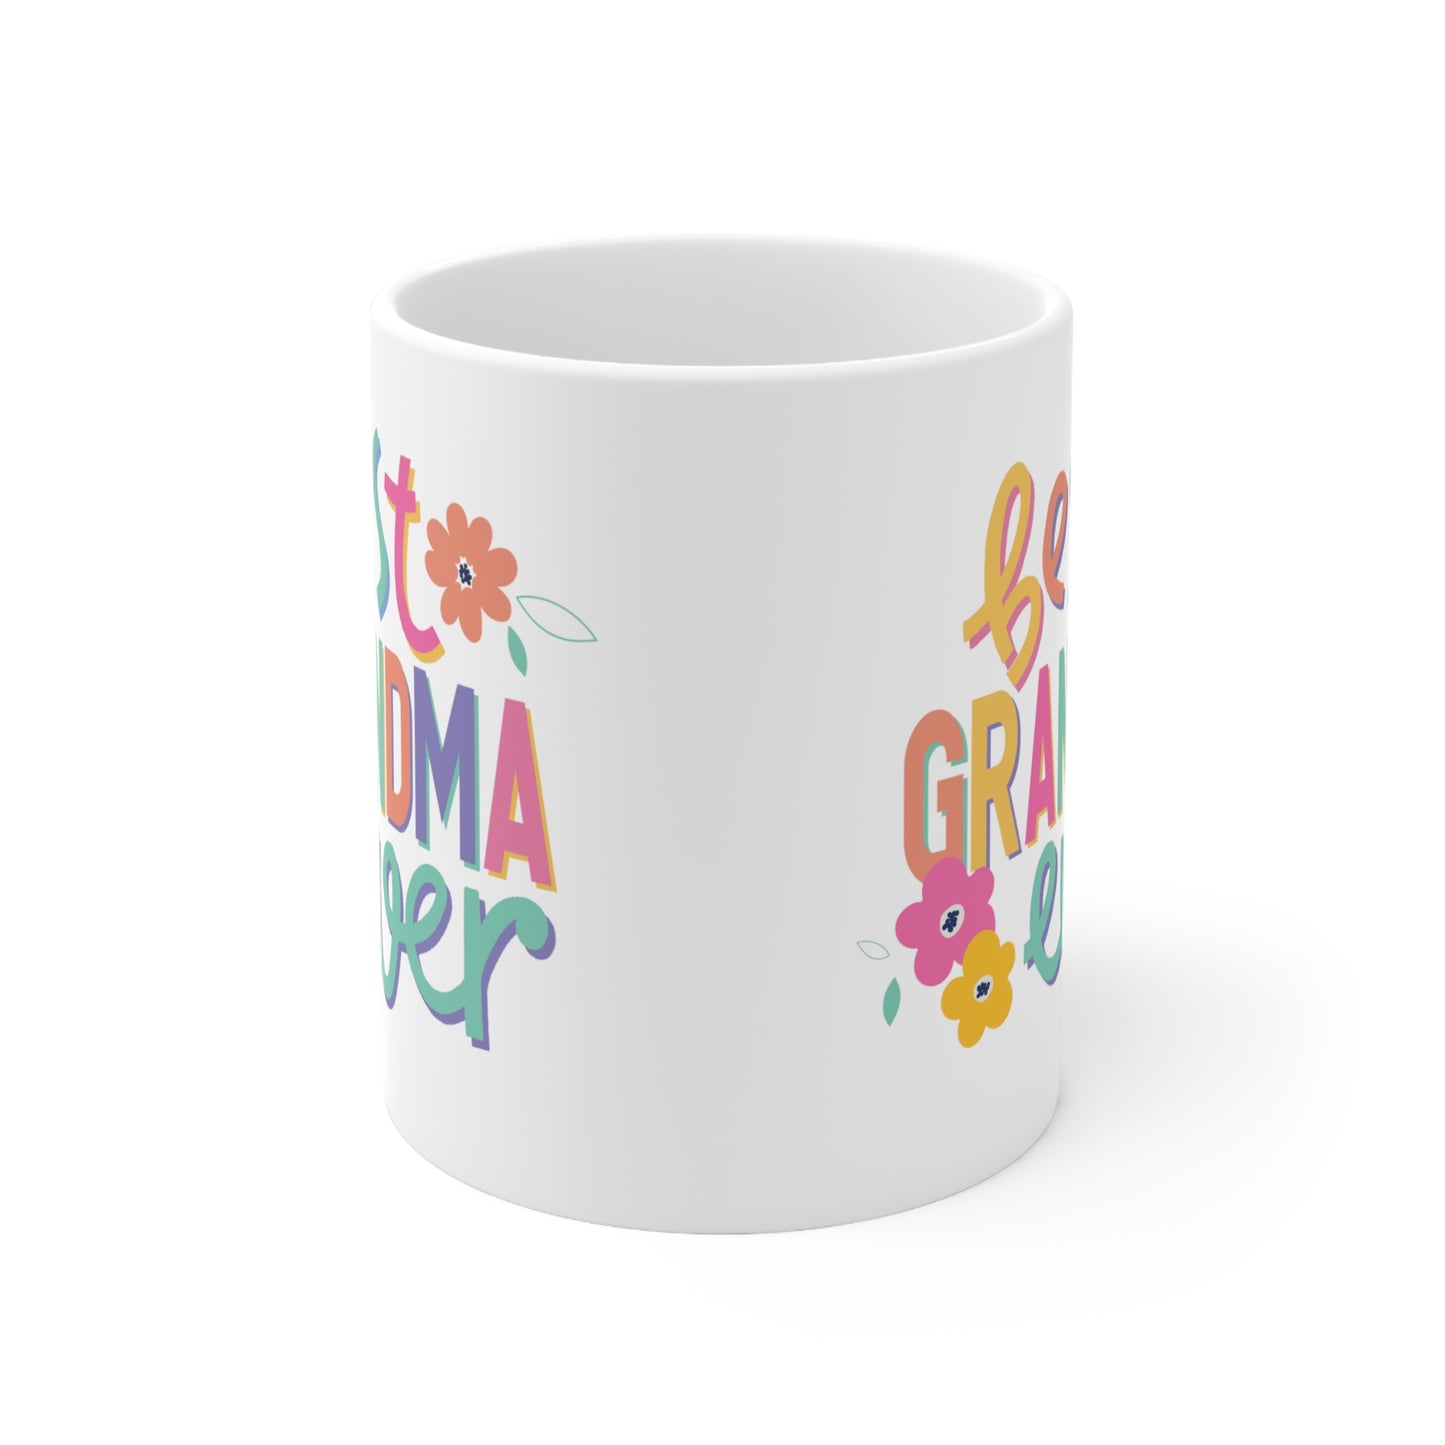 Best Grandma Ever 11oz Ceramic Mug, Mothers Day Gift